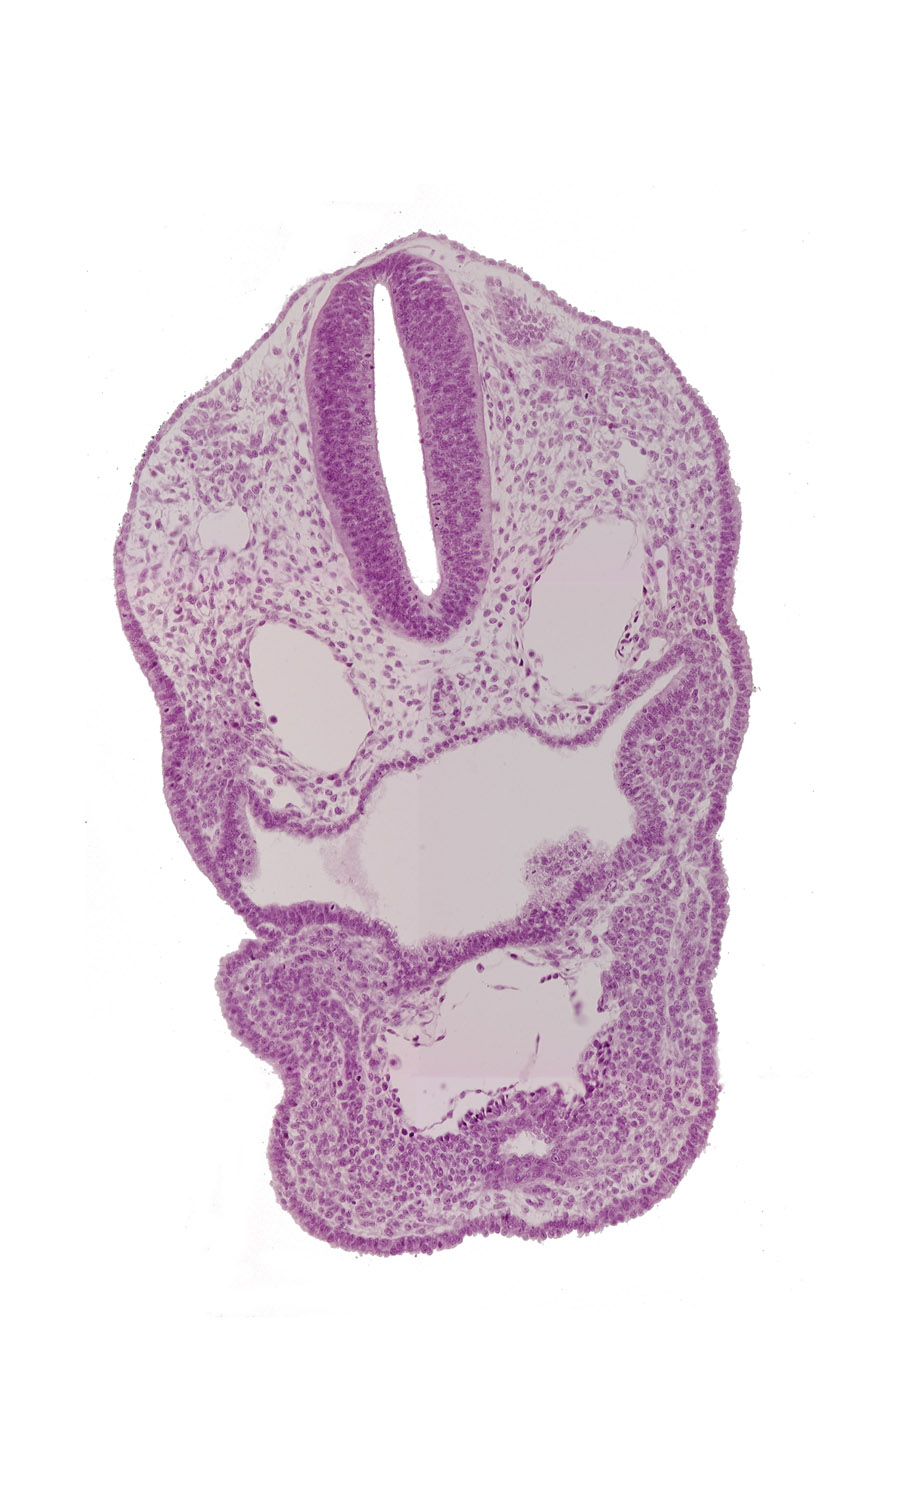 aortic sac, cephalic edge of pericardial sac, dermatomyotome 1 (O-1), dermatomyotome 2 (O-2) , dorsal aorta, ectodermal ring, perinotochordal lamina, pharyngeal arch 3, pharyngeal groove 1, pharyngeal groove 2, pharyngeal groove 3, pharyngeal pouch 3, precardinal vein